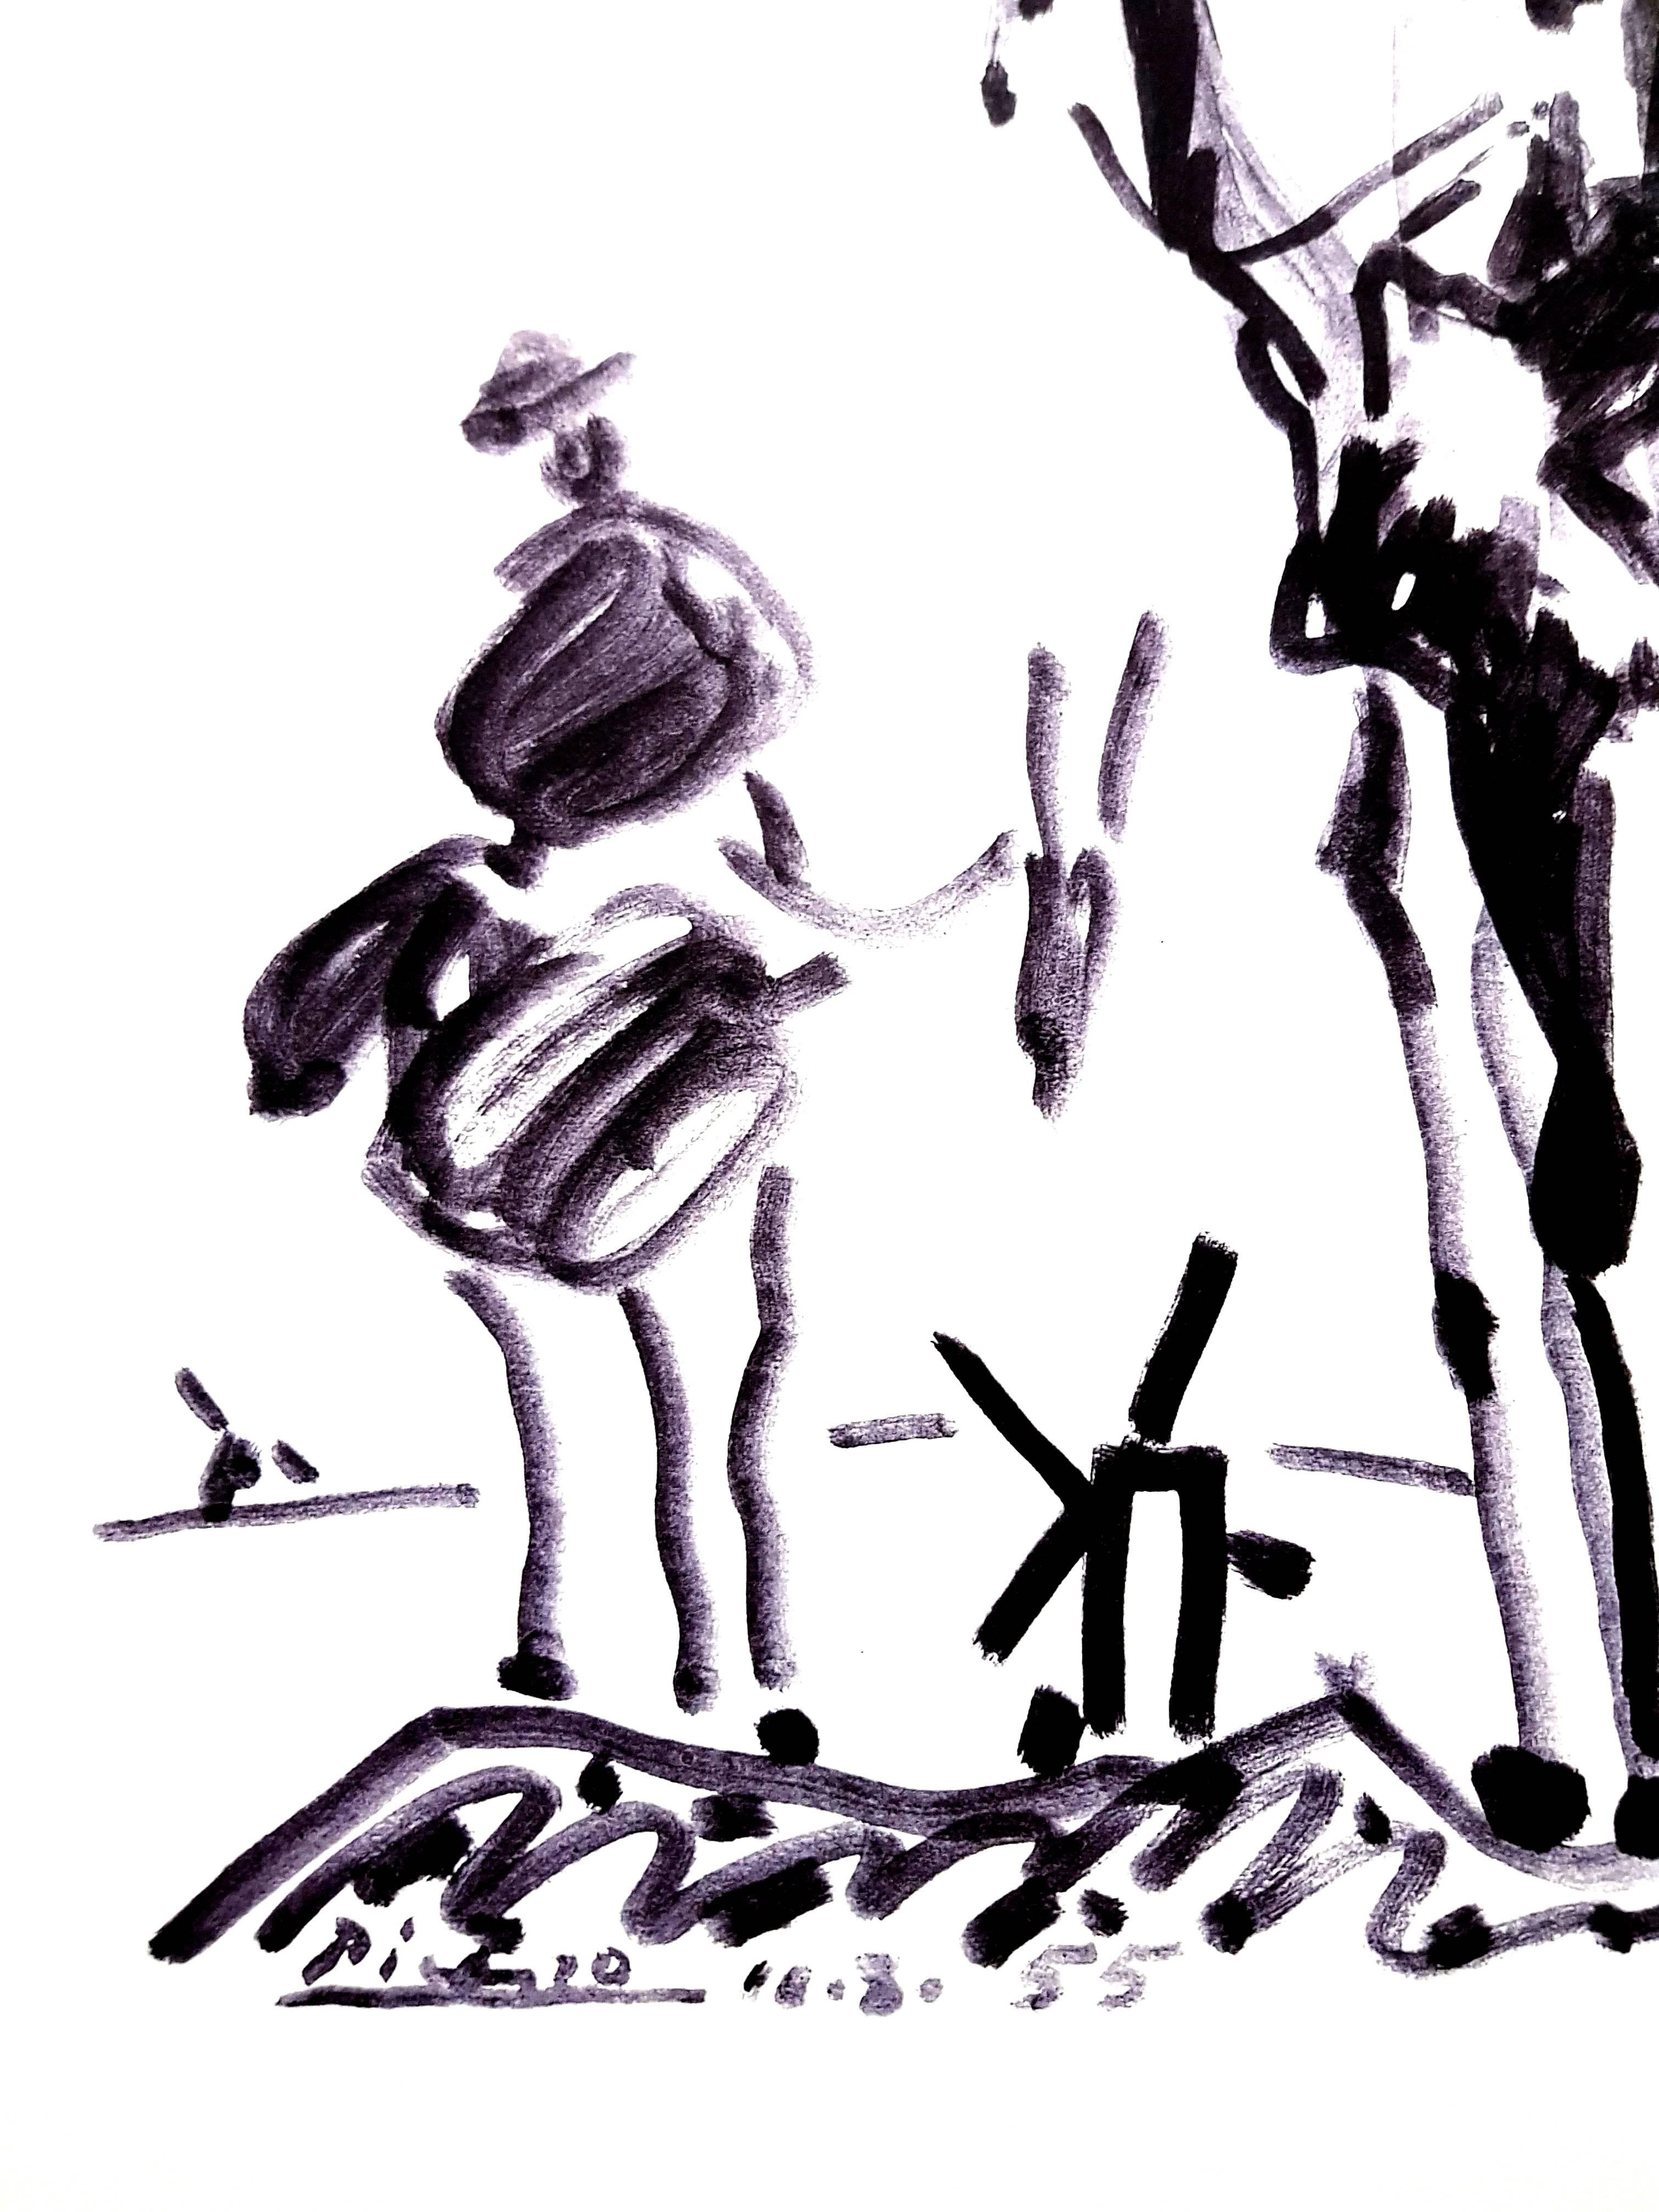 Nach Pablo Picasso – Don Quixote – Lithographie (Surrealismus), Print, von (after) Pablo Picasso